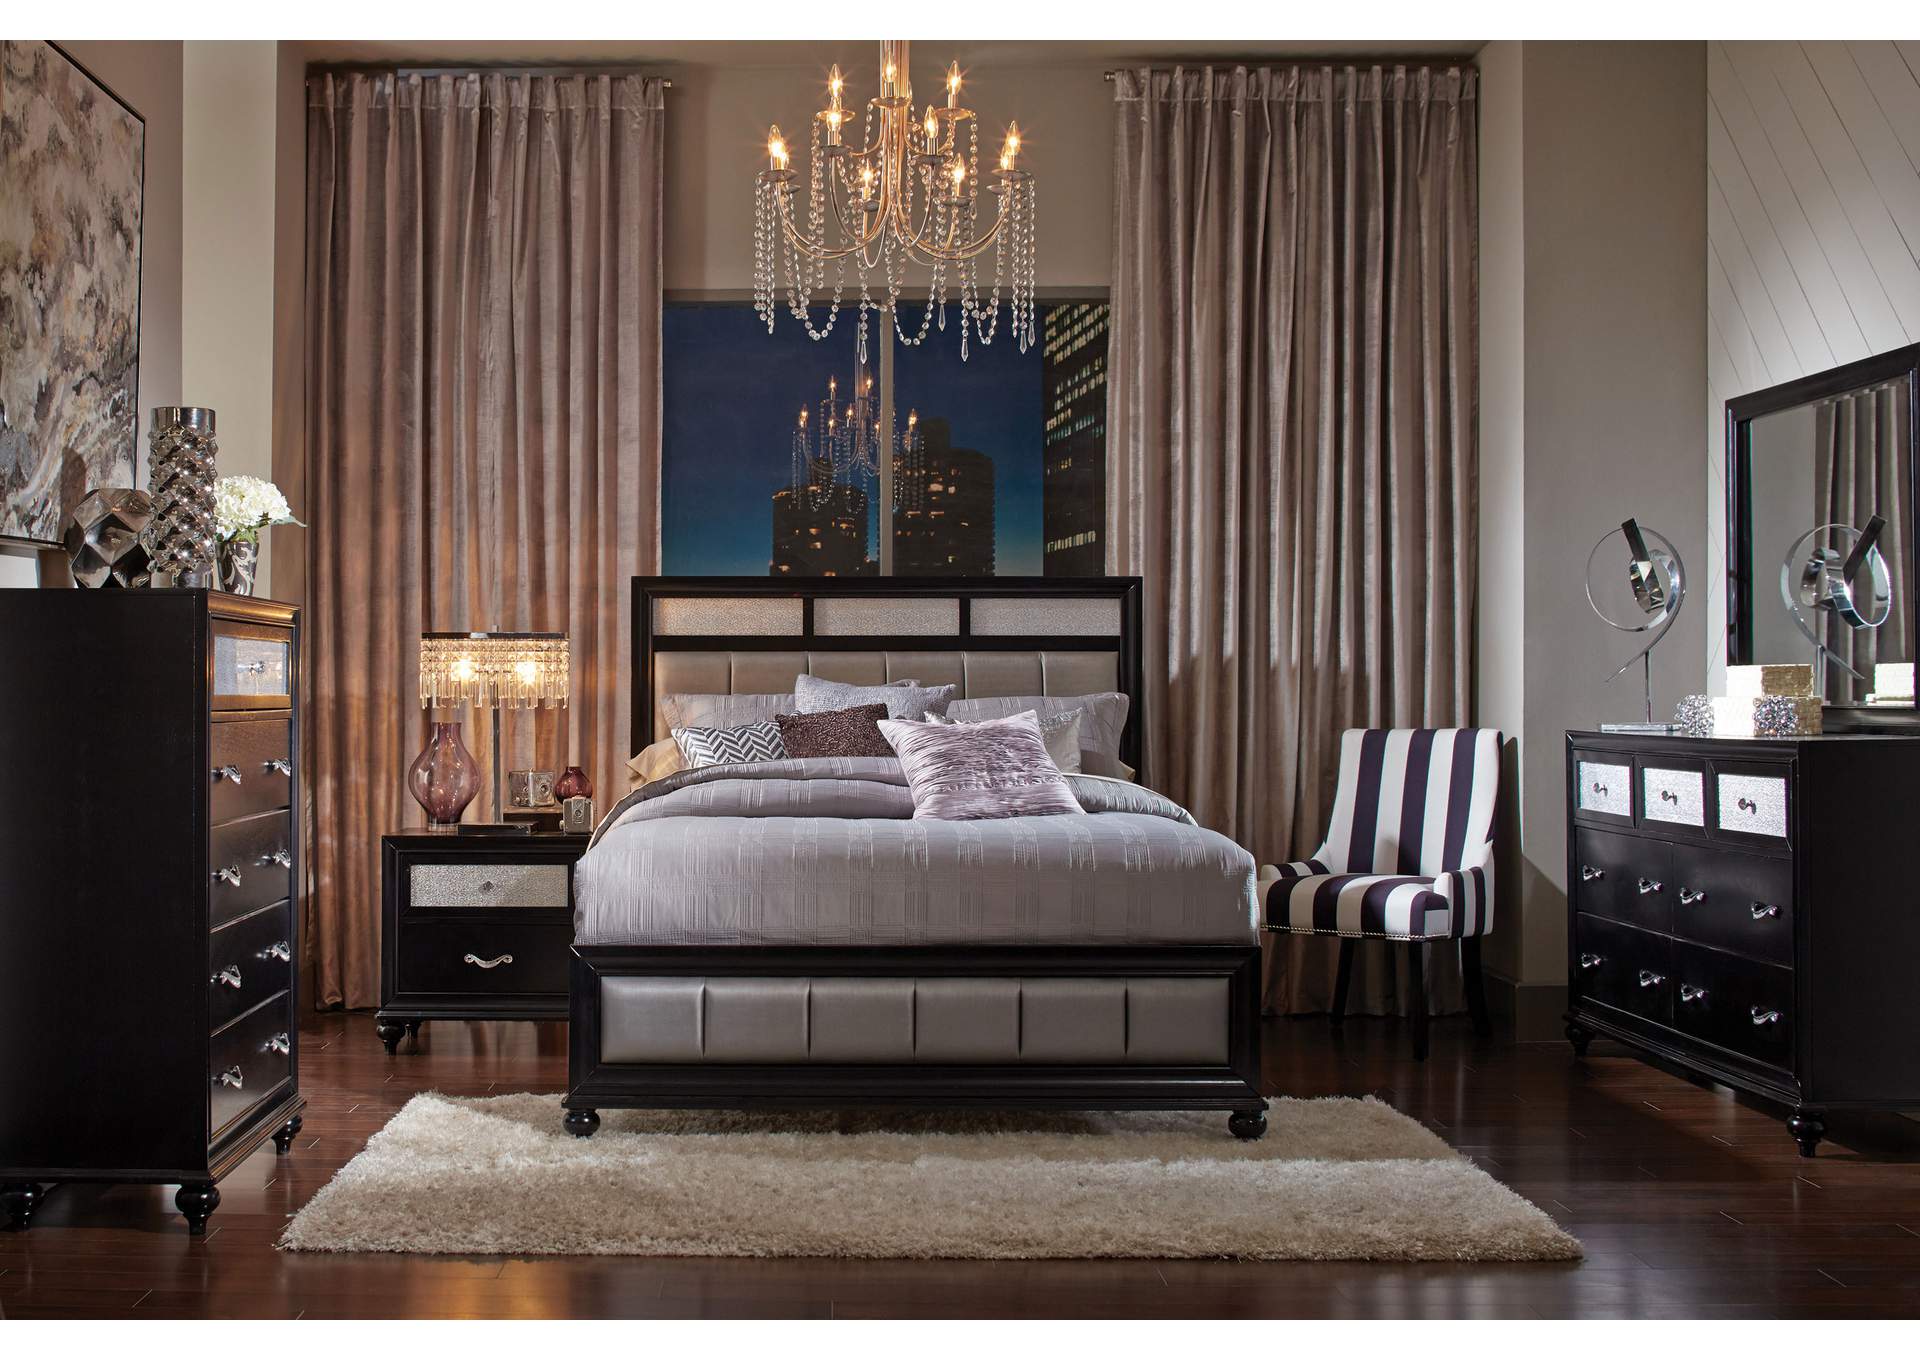 Barzini California King Upholstered Bed Black and Grey,Coaster Furniture